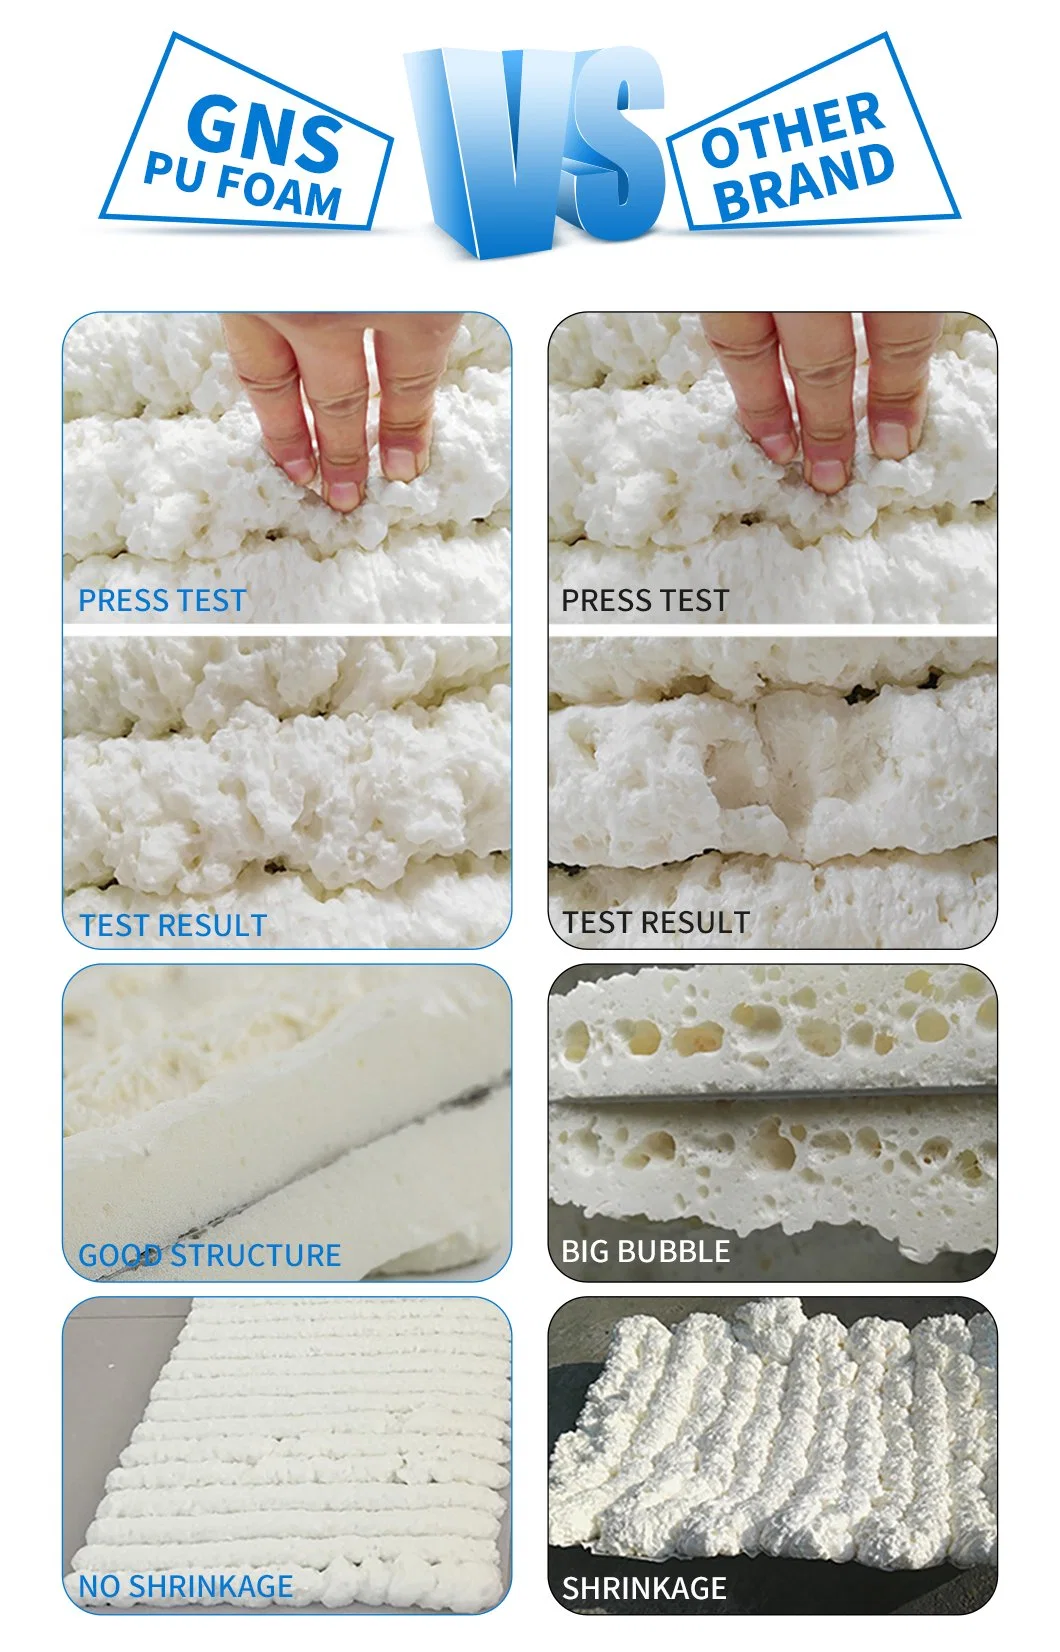 Gns A99 Adhesive Insulation Construction Polyurethane Spray PU Foam for Bonding Adhesive